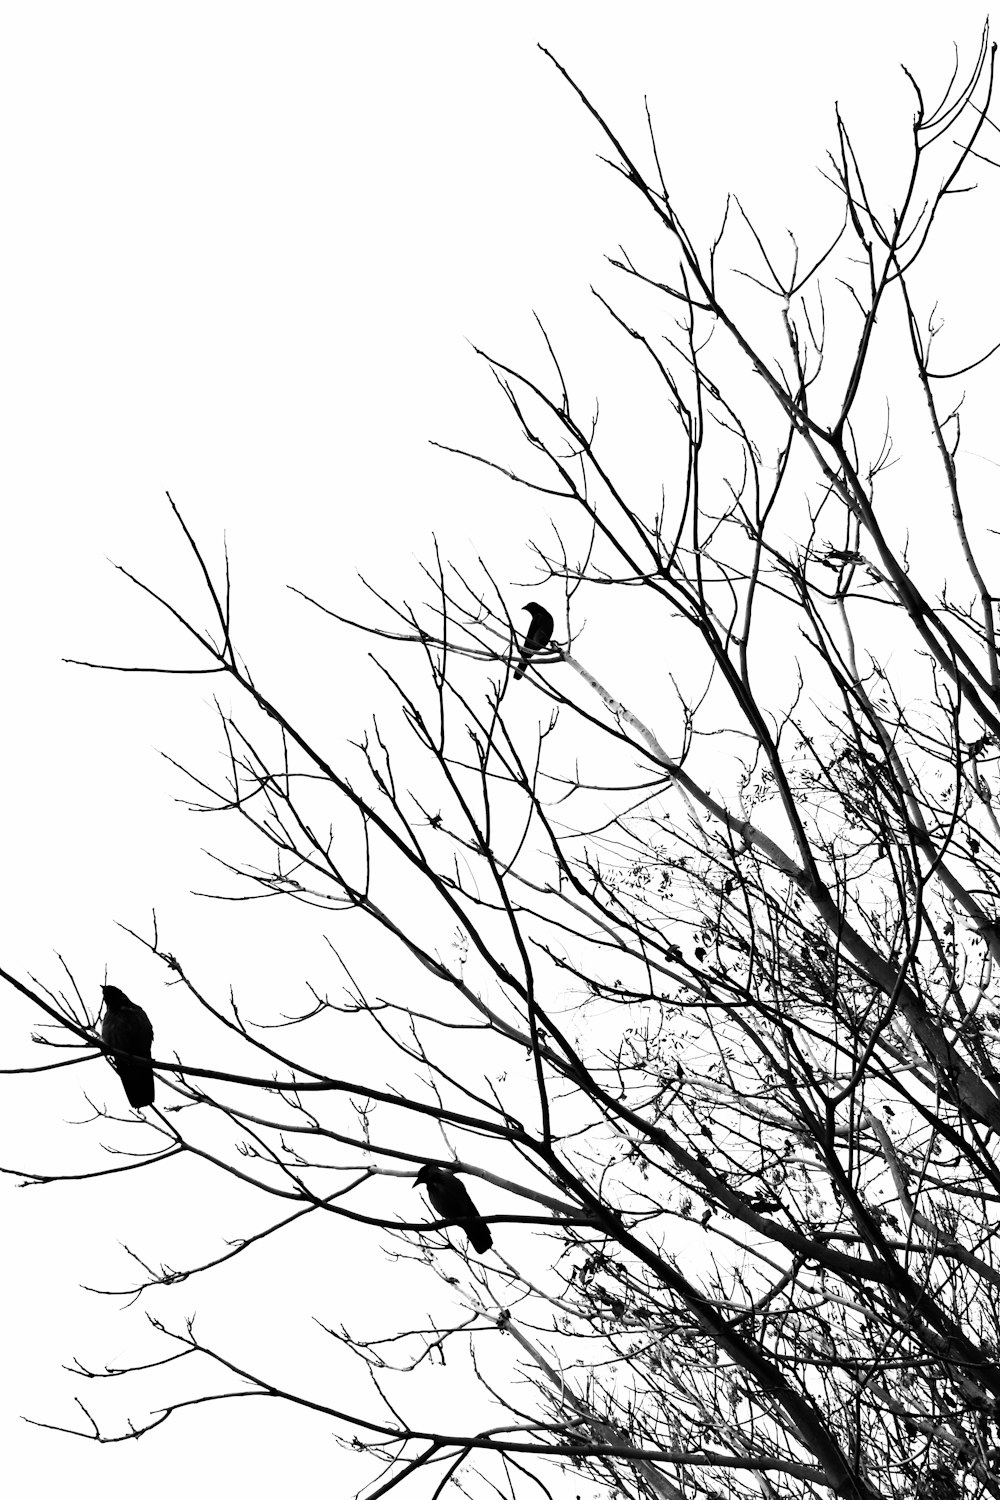 bird on bare tree branch